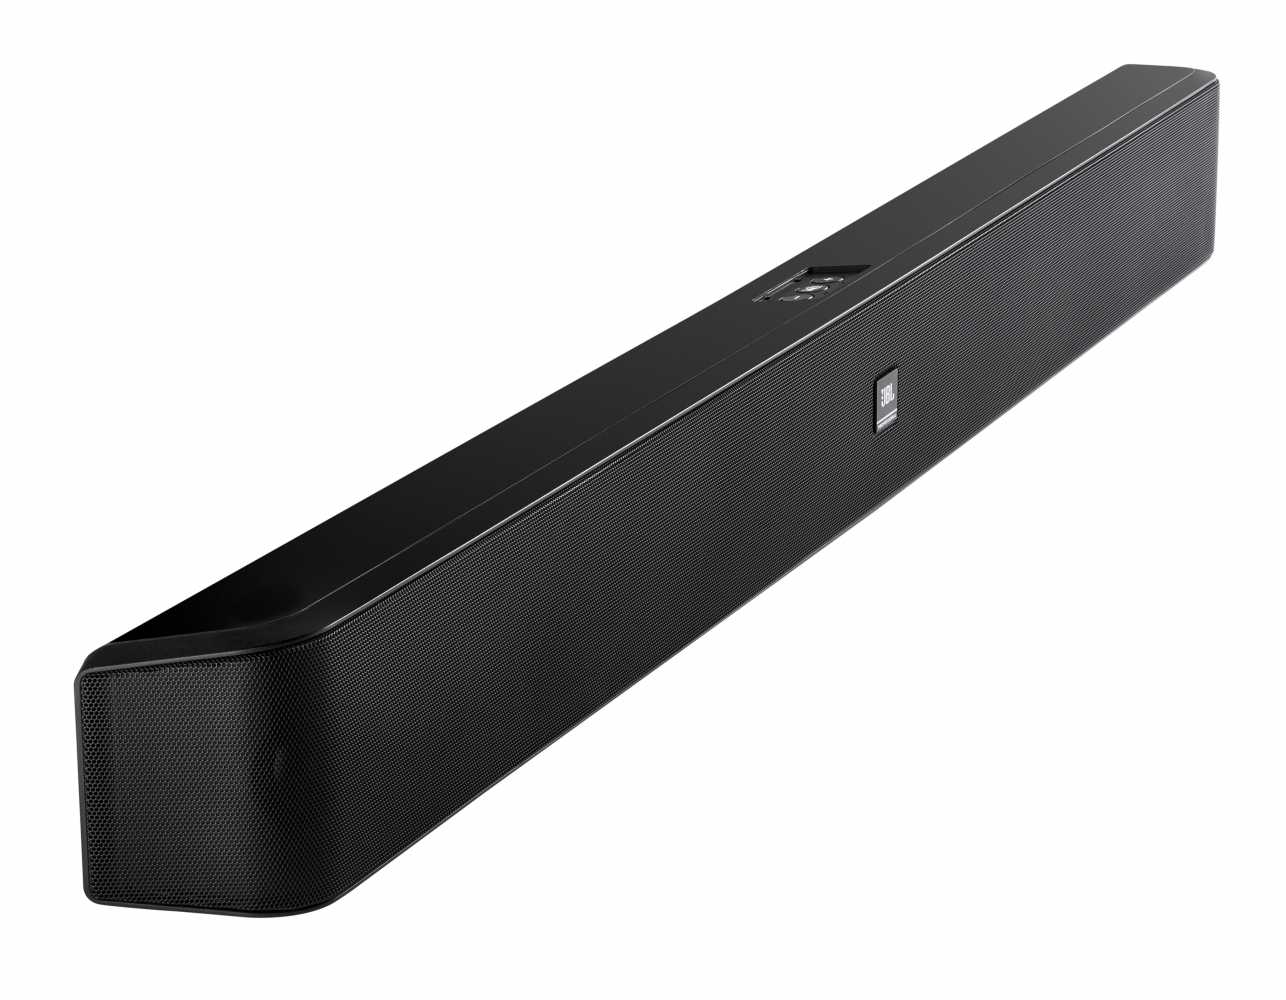 The JBL Pro Soundbar PSB-1 is available now